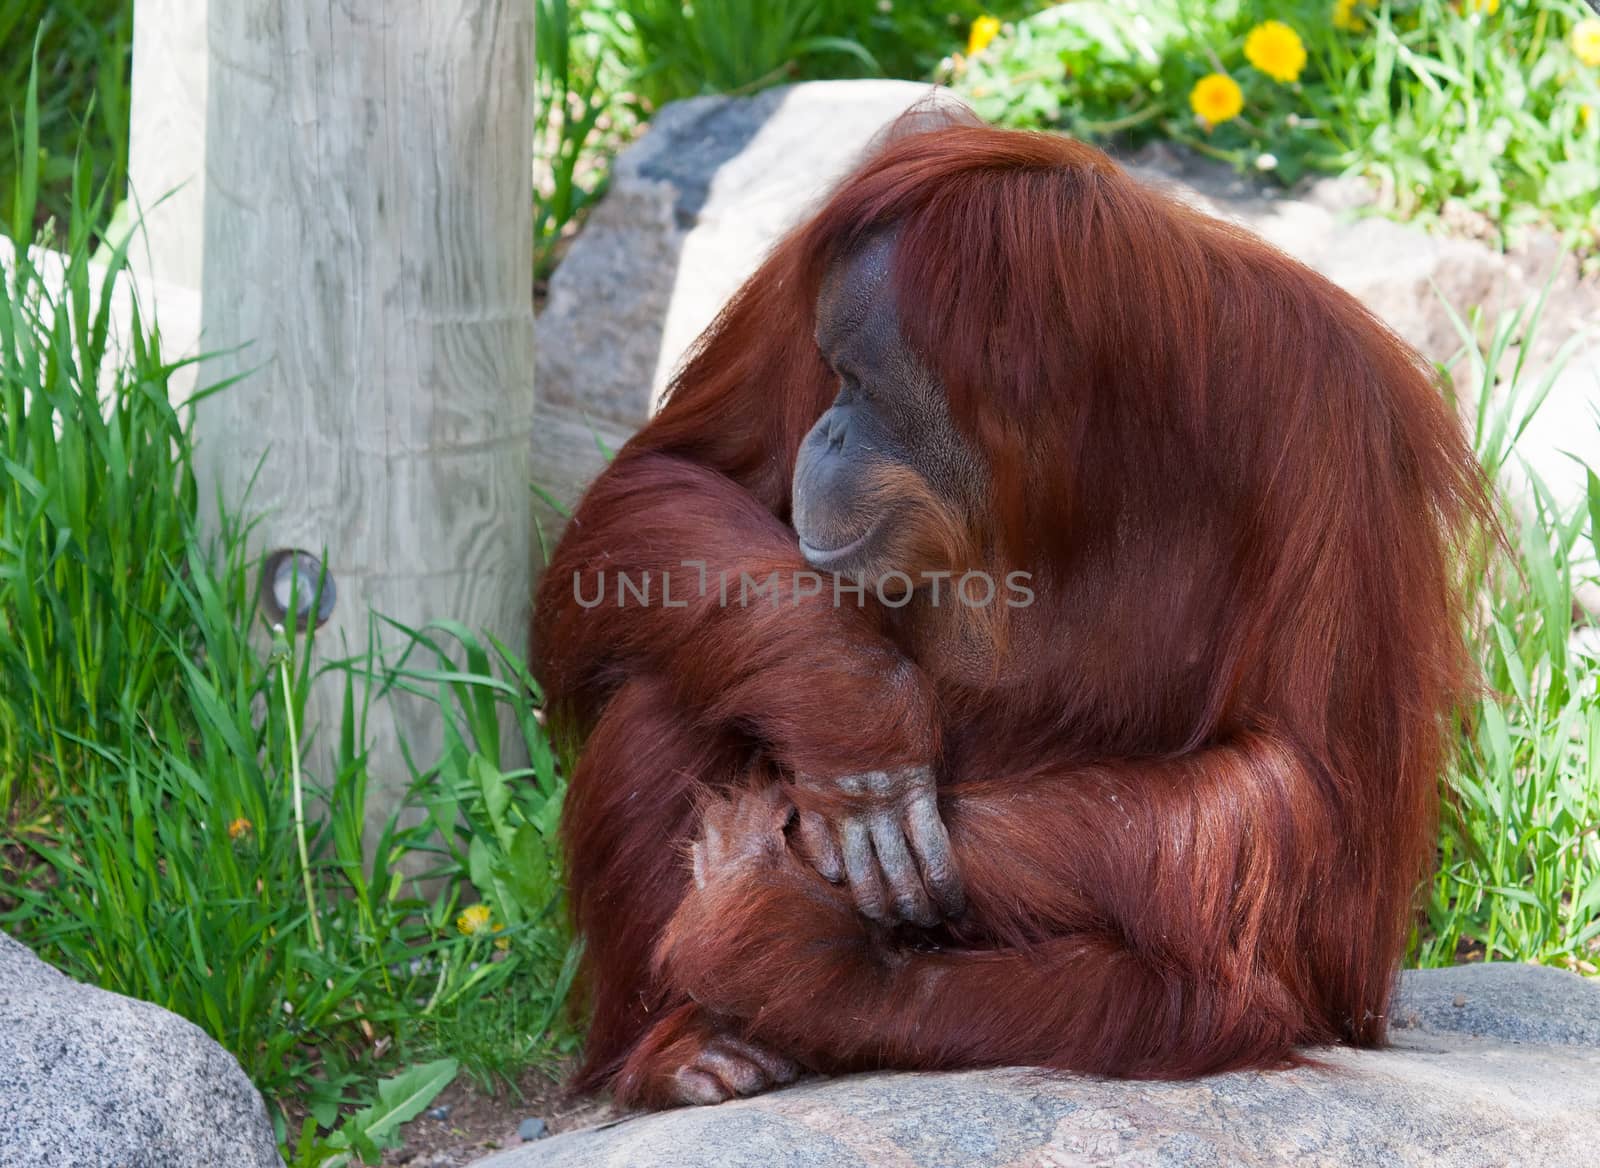 Orangutan (Pongo pygmaeus) portrait  by Coffee999